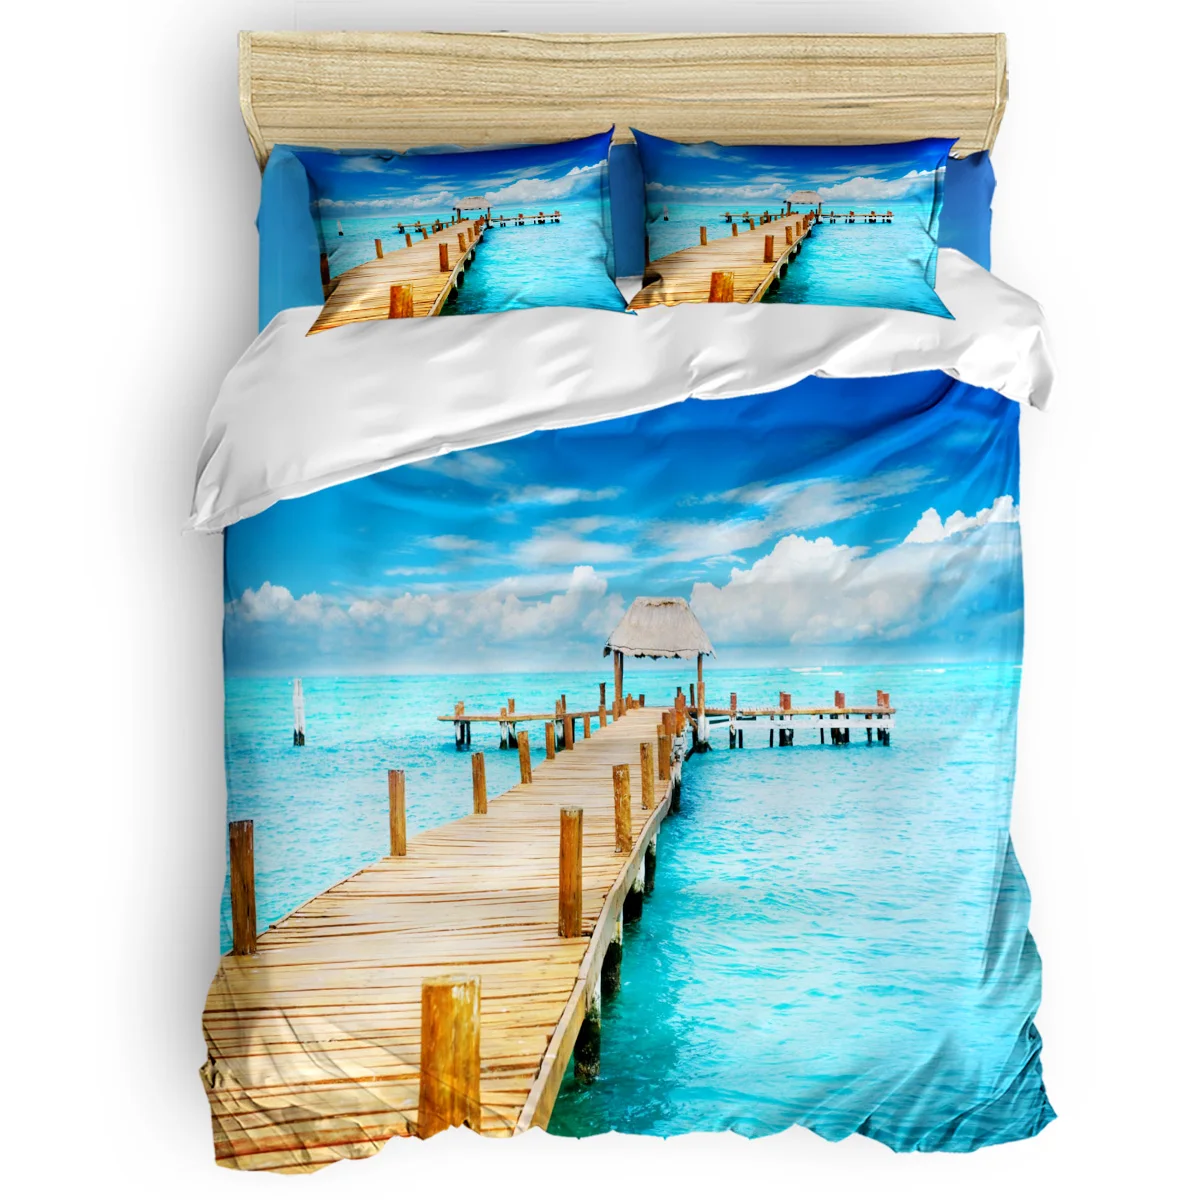 

Sea Pier Wooden Bridge Duvet Cover Set Warm and Comfortable Bed Sheet Bedroom Comforter Set 2/3/4pcs Bedding Set